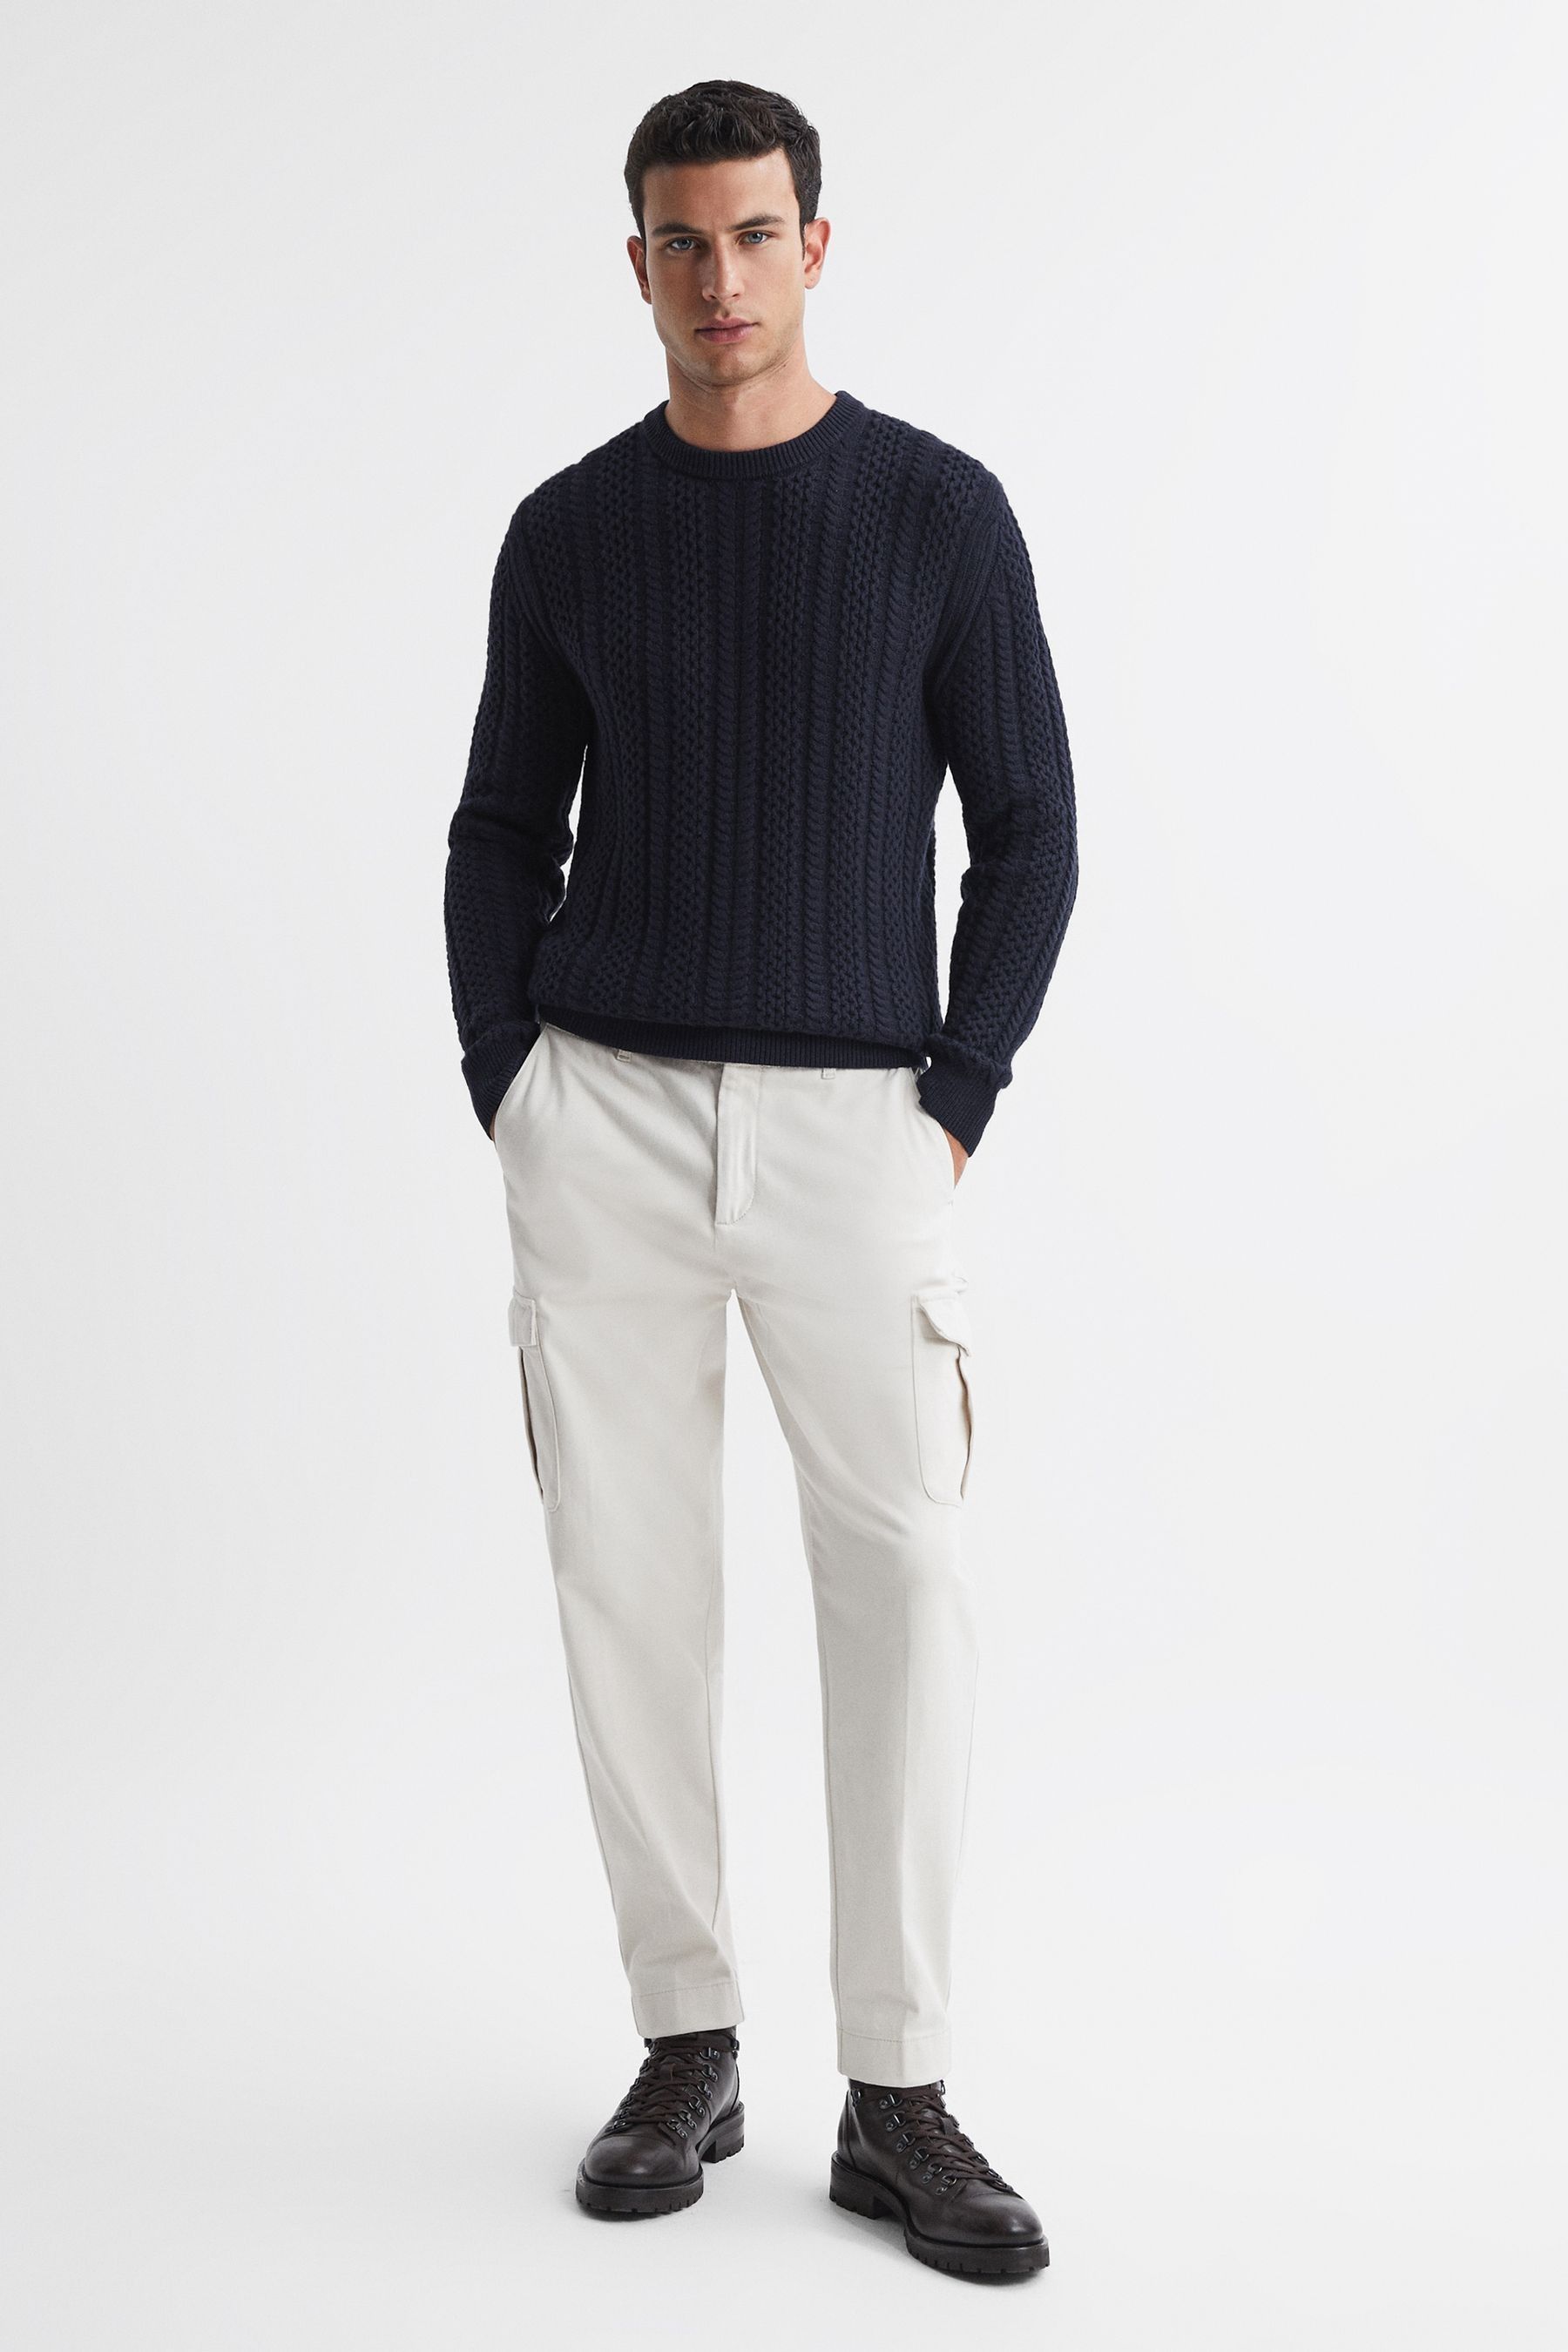 Reiss Arlington - Navy Slim Fit Wool-cotton Cable Knit Jumper, Xxl